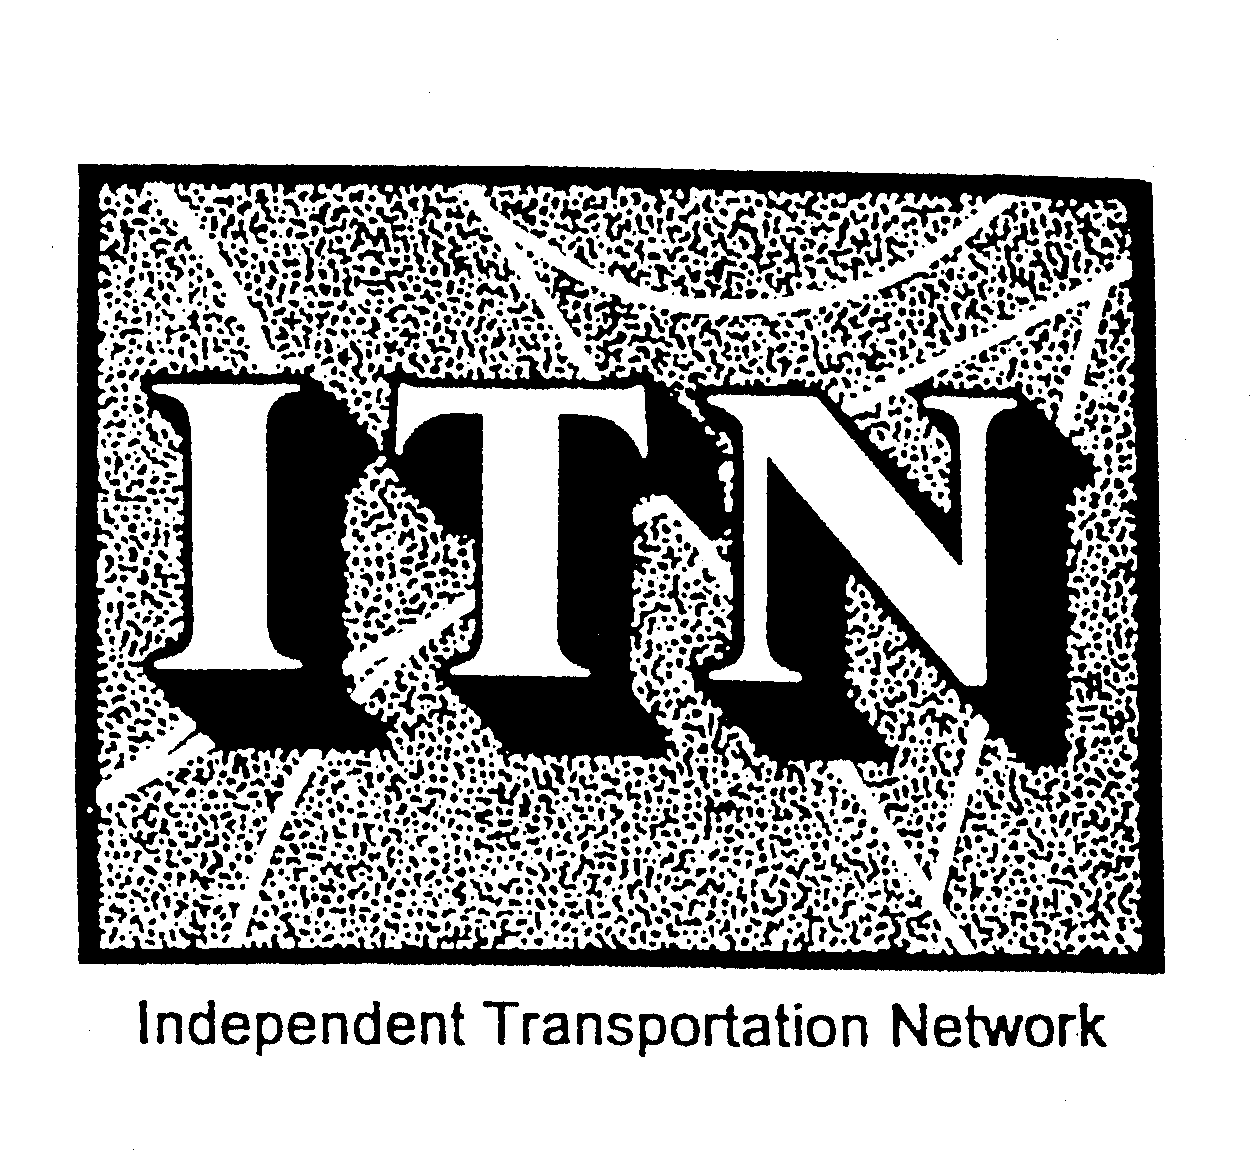  ITN INDEPENDENT TRANSPORTATION NETWORK